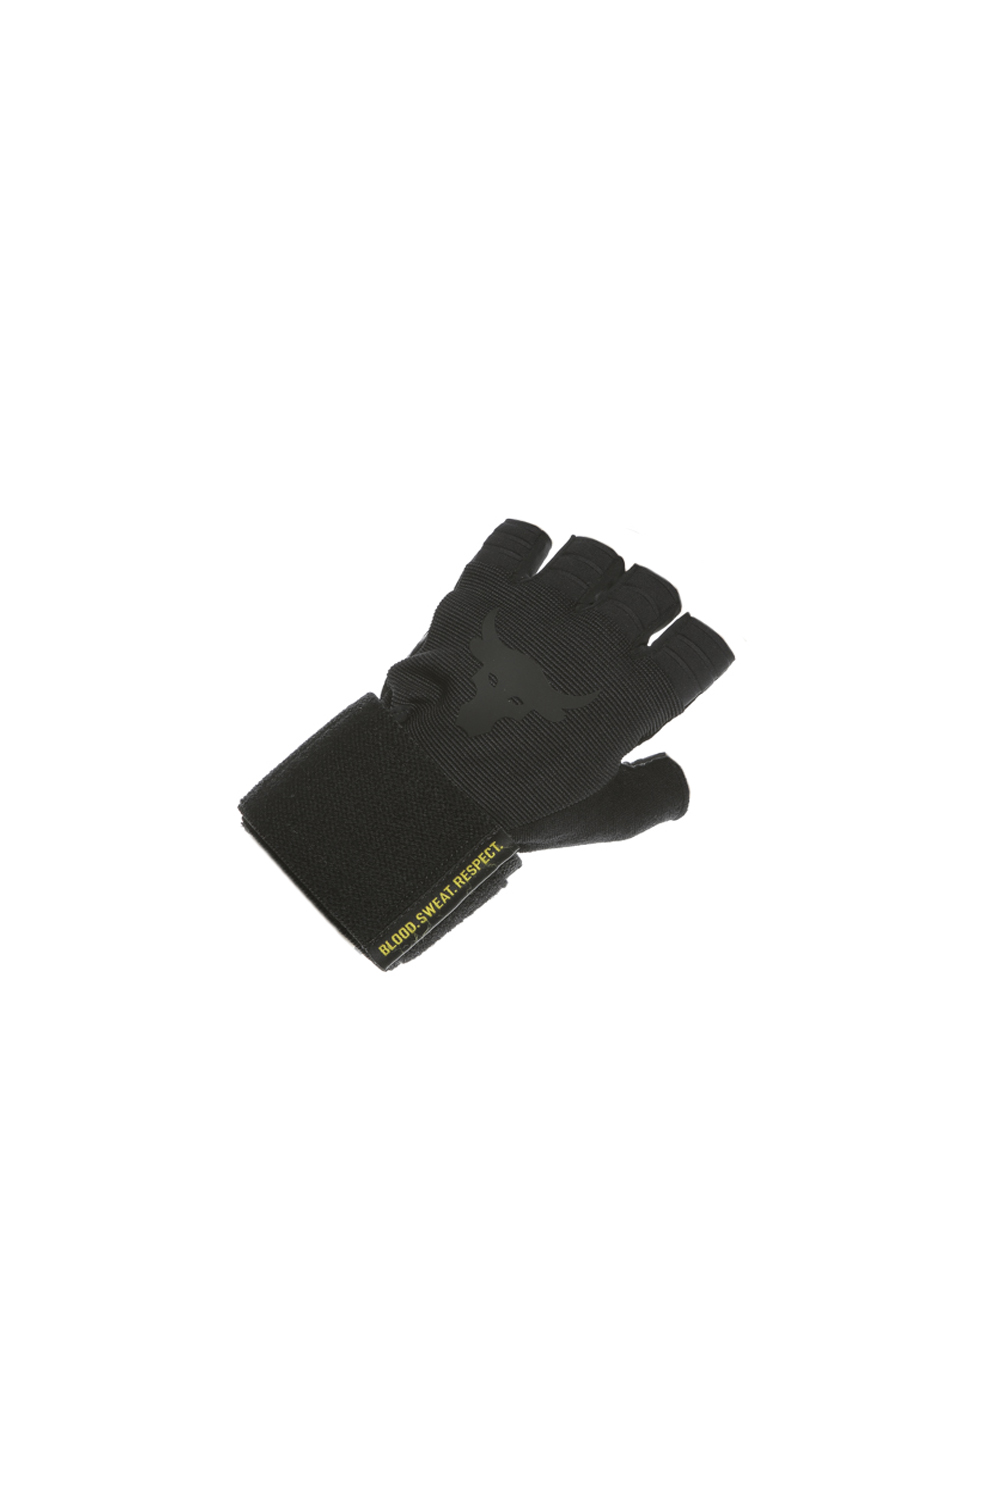 UNDER ARMOUR – Ανδρικά γάντια προπόνησης UNDER ARMOUR Project Rock Training Glove μαύρα 1802084.0-7152